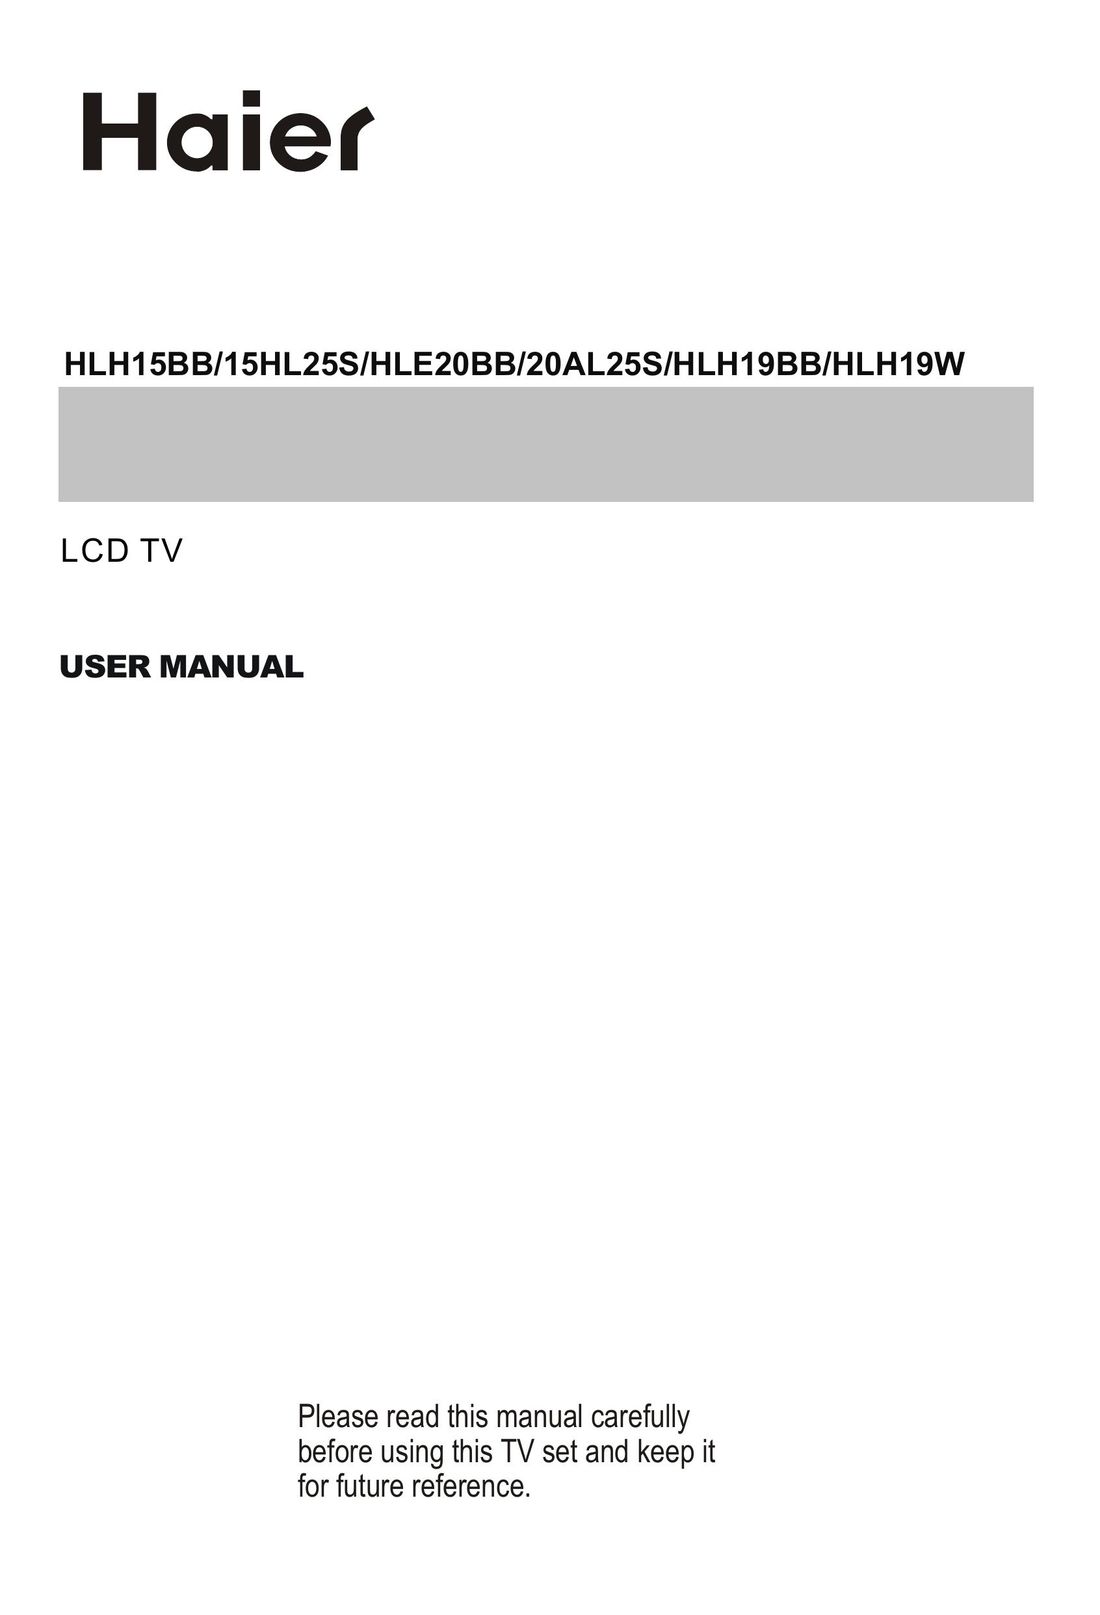 Haier 20AL25S Flat Panel Television User Manual